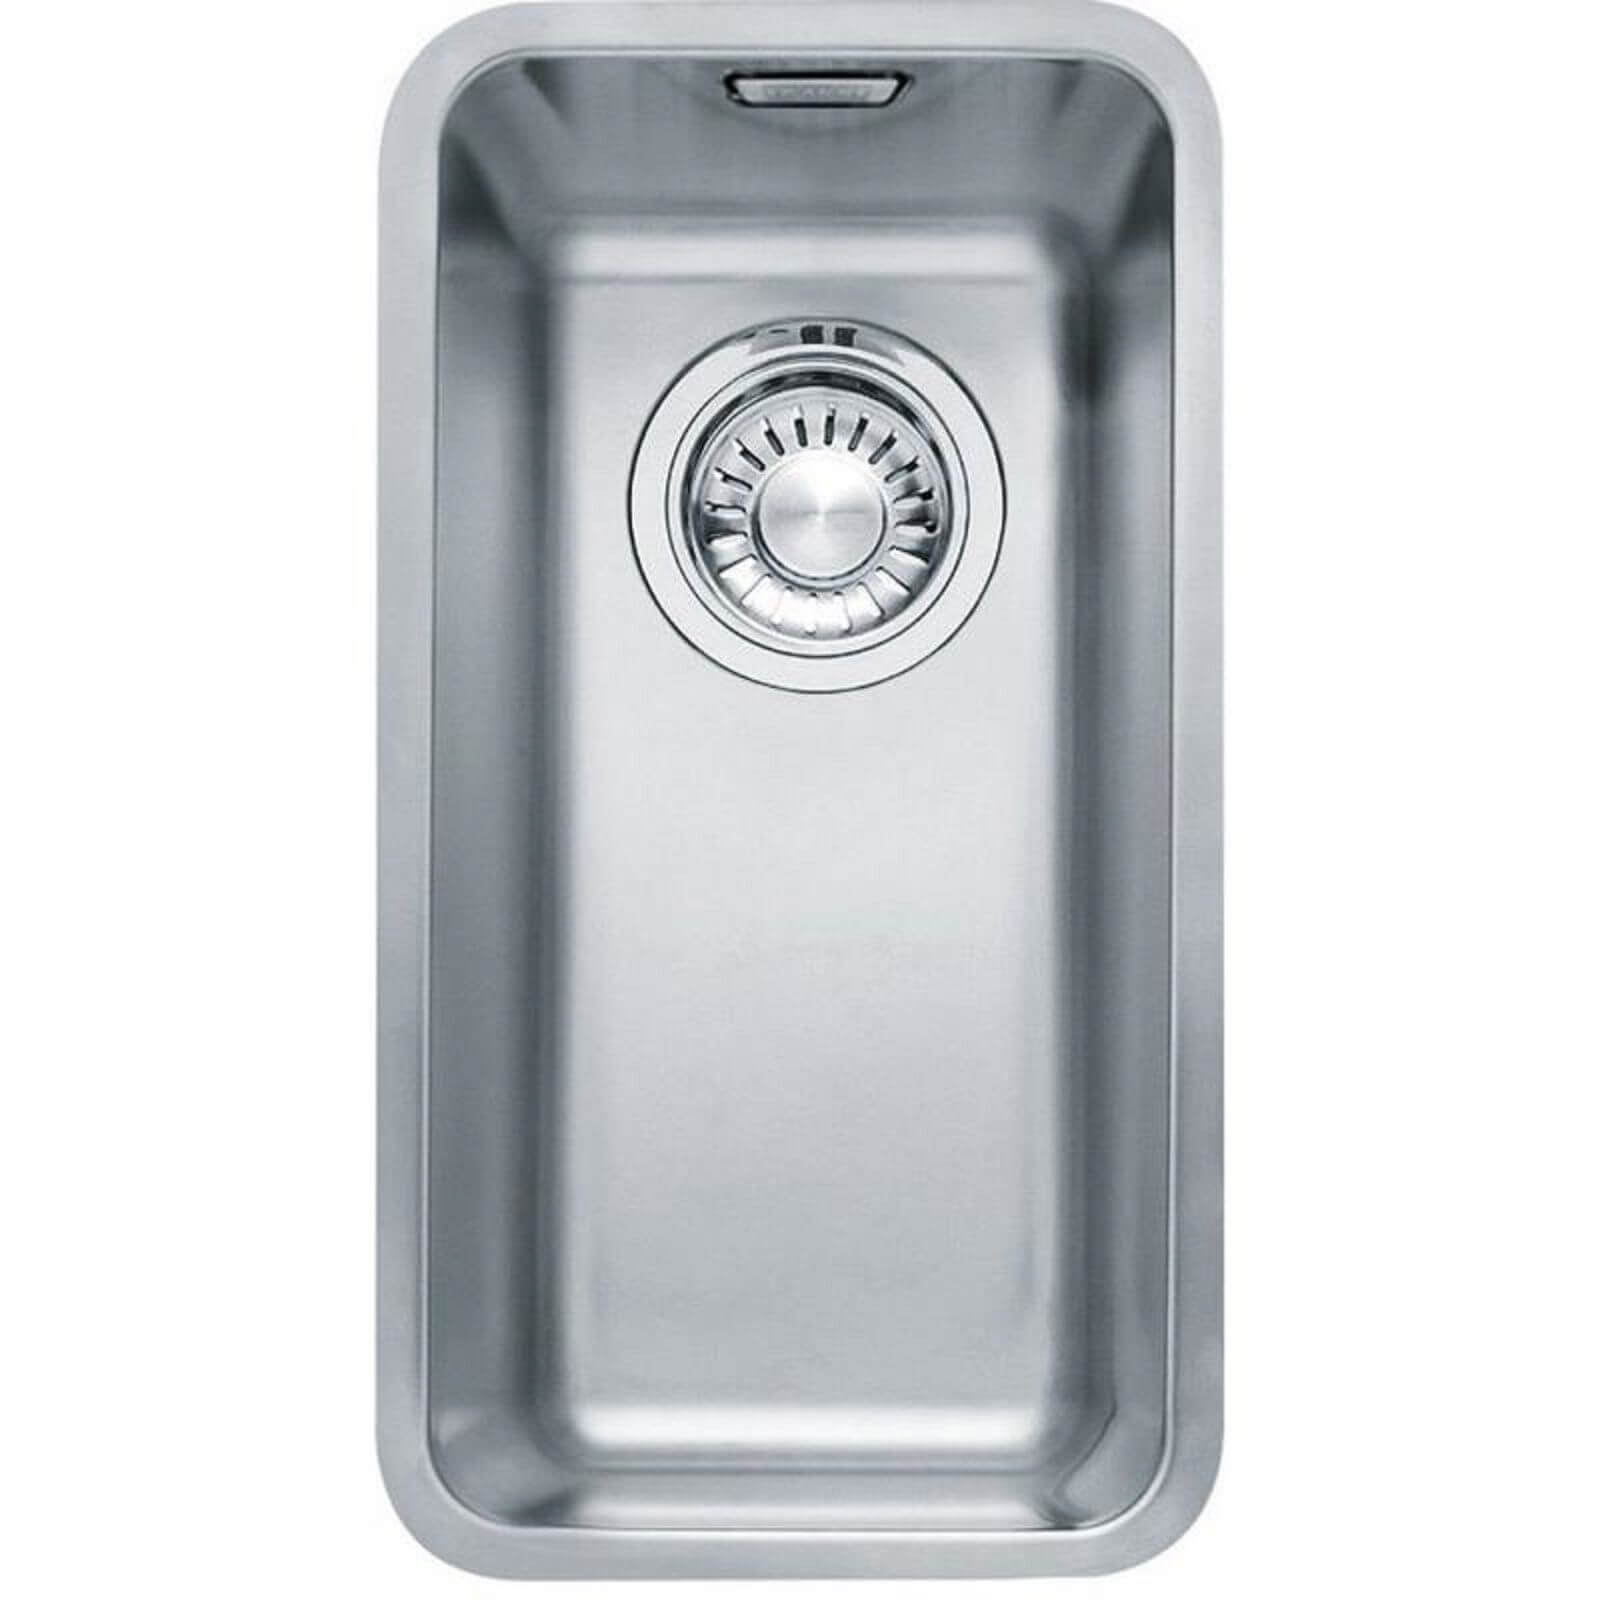 Franke Kubus Silver Reversible Kitchen Sink - 0.5 Bowl